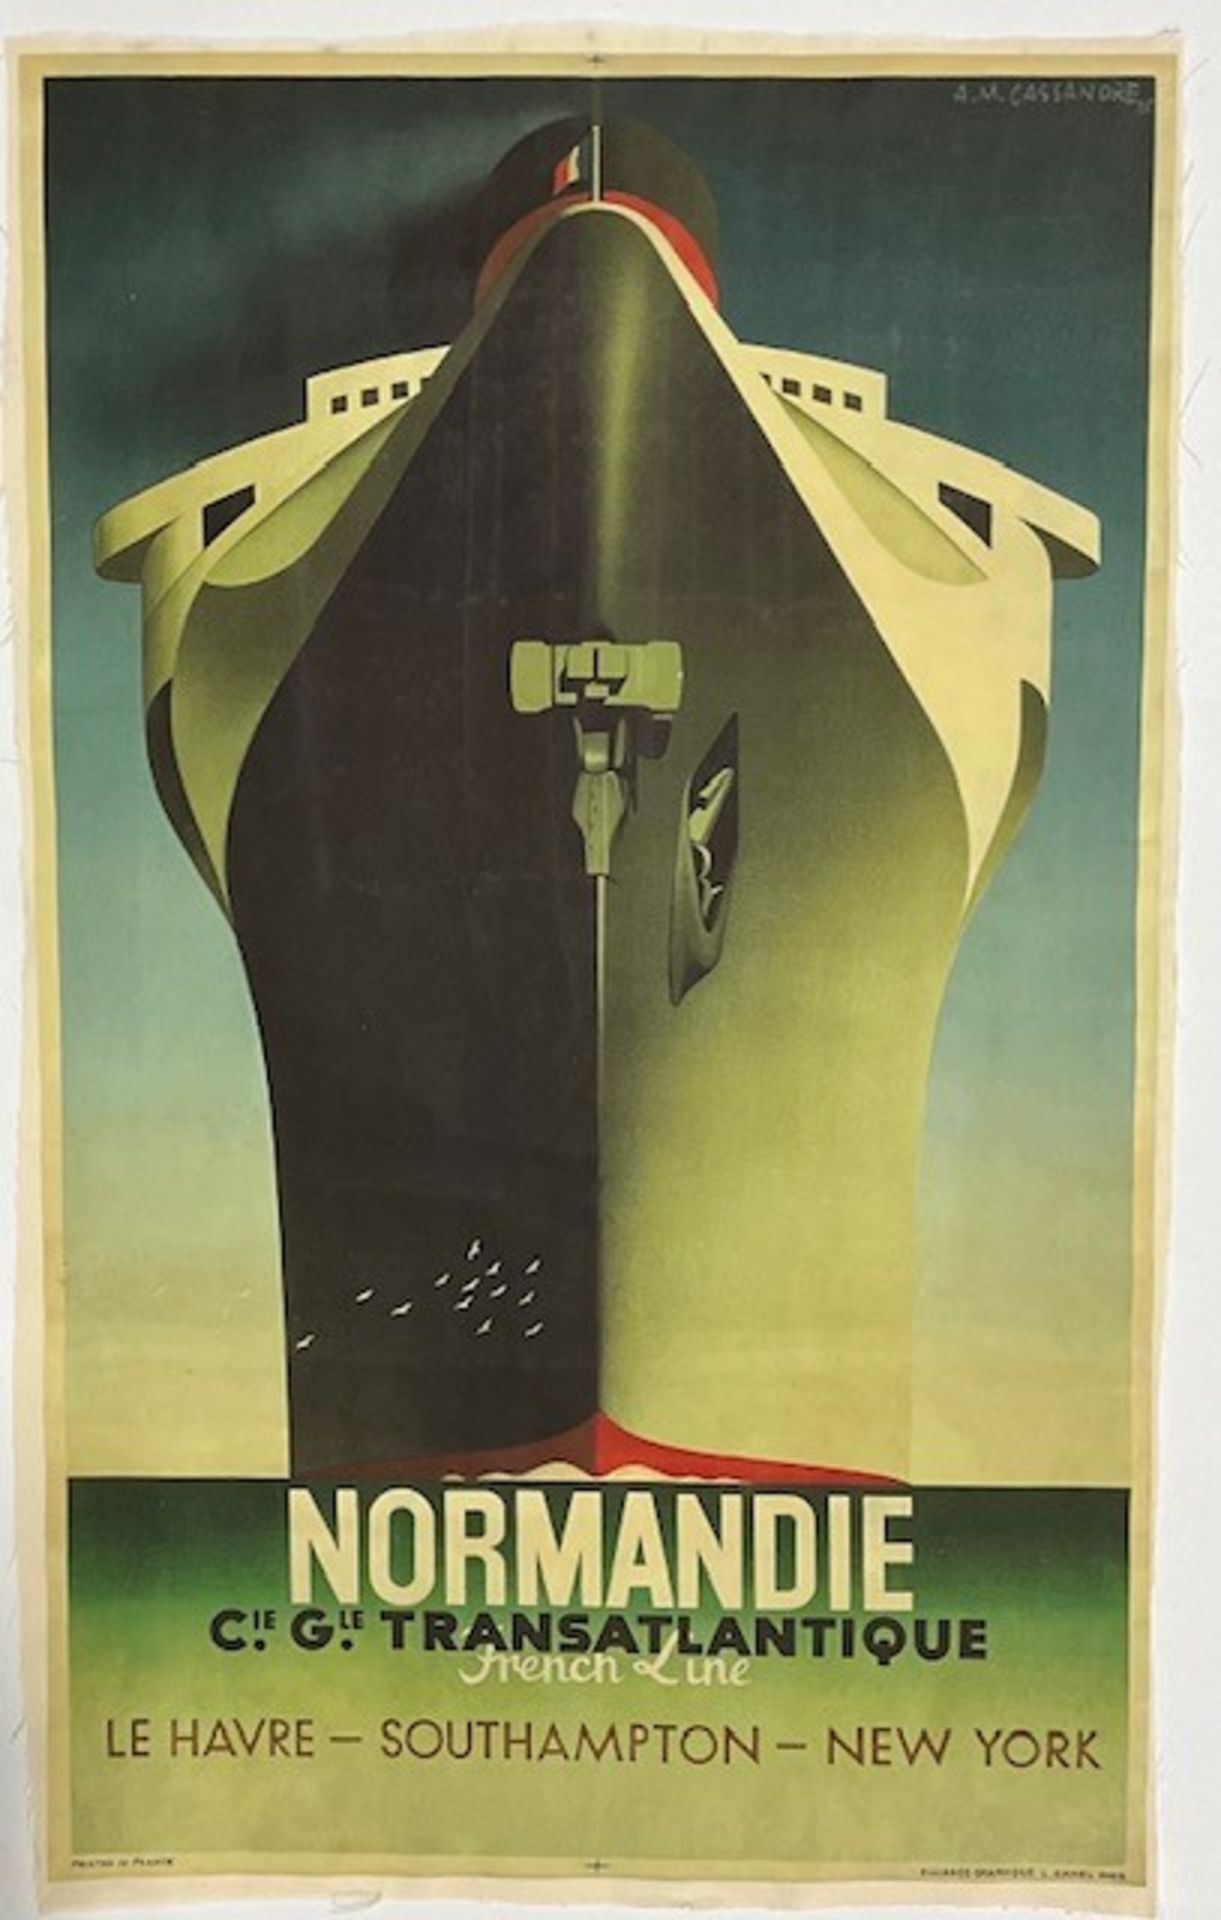 Normandie Ship Le Havre Southampton New York Poster